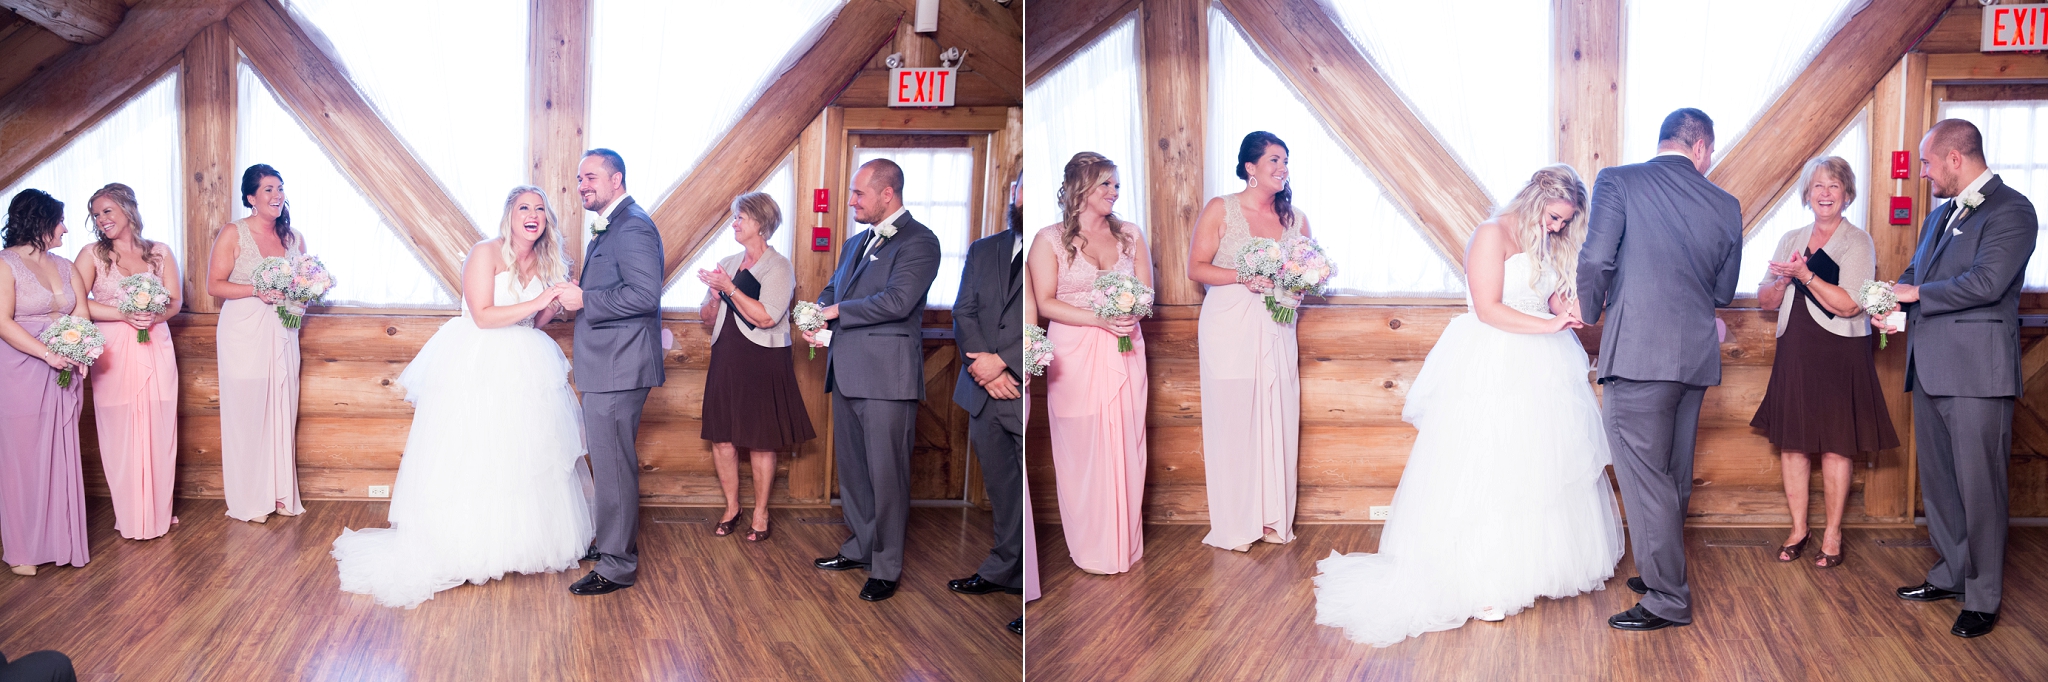 The Country Lodge Wedding Photos Edmonton